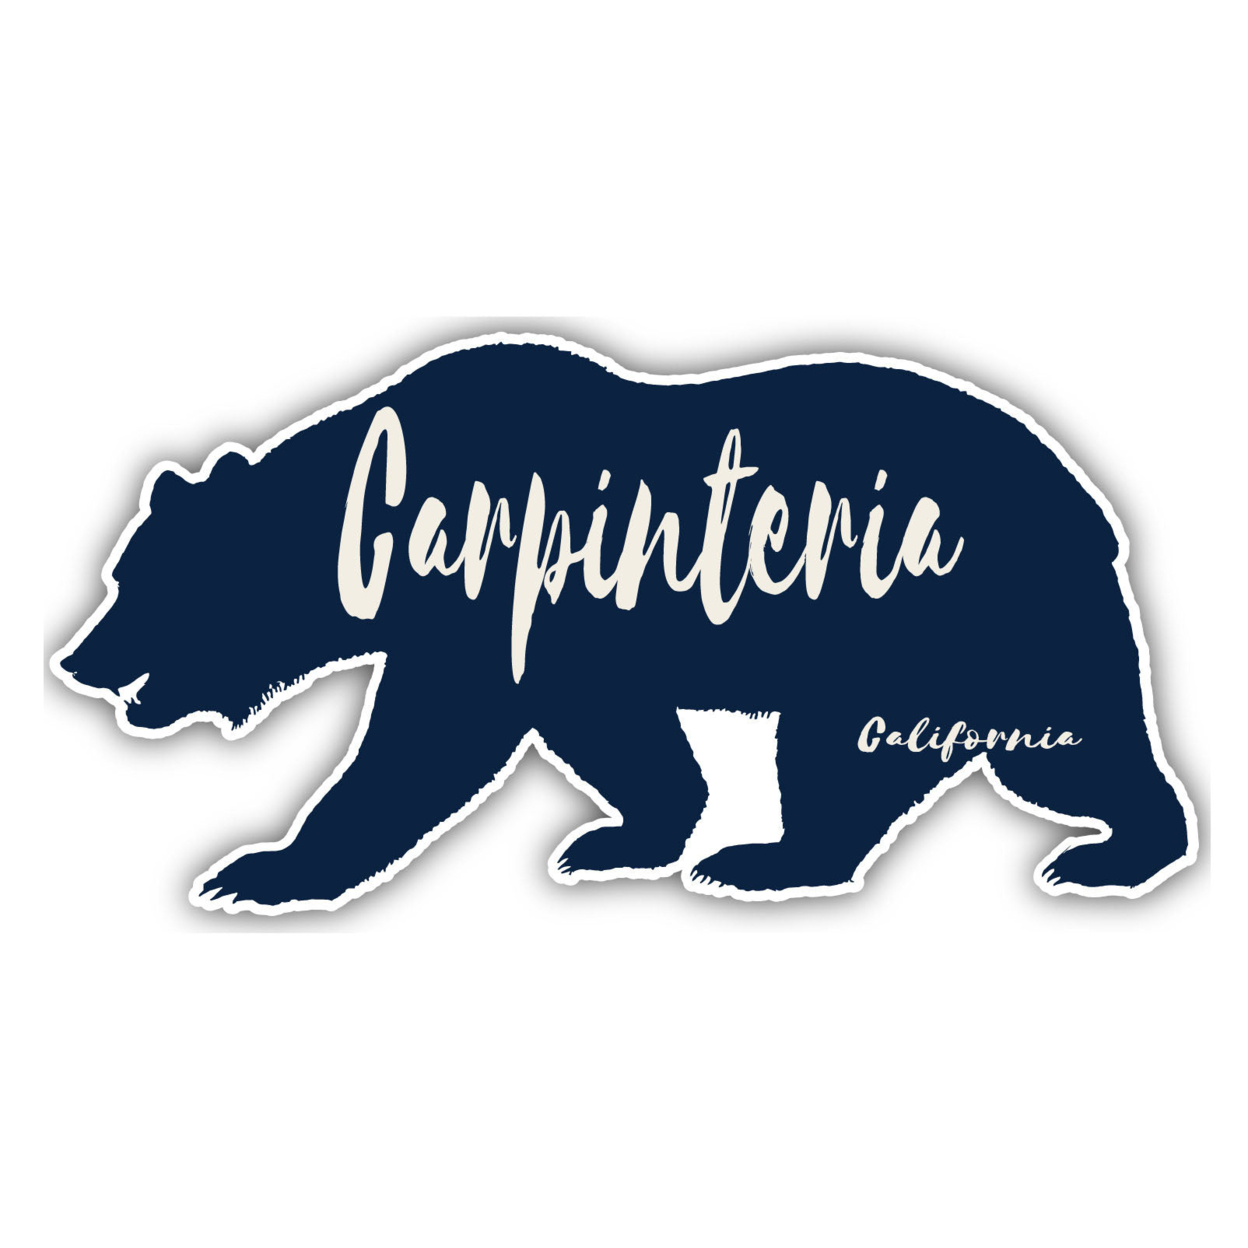 Carpinteria California Souvenir Decorative Stickers (Choose Theme And Size) - 4-Pack, 8-Inch, Camp Life